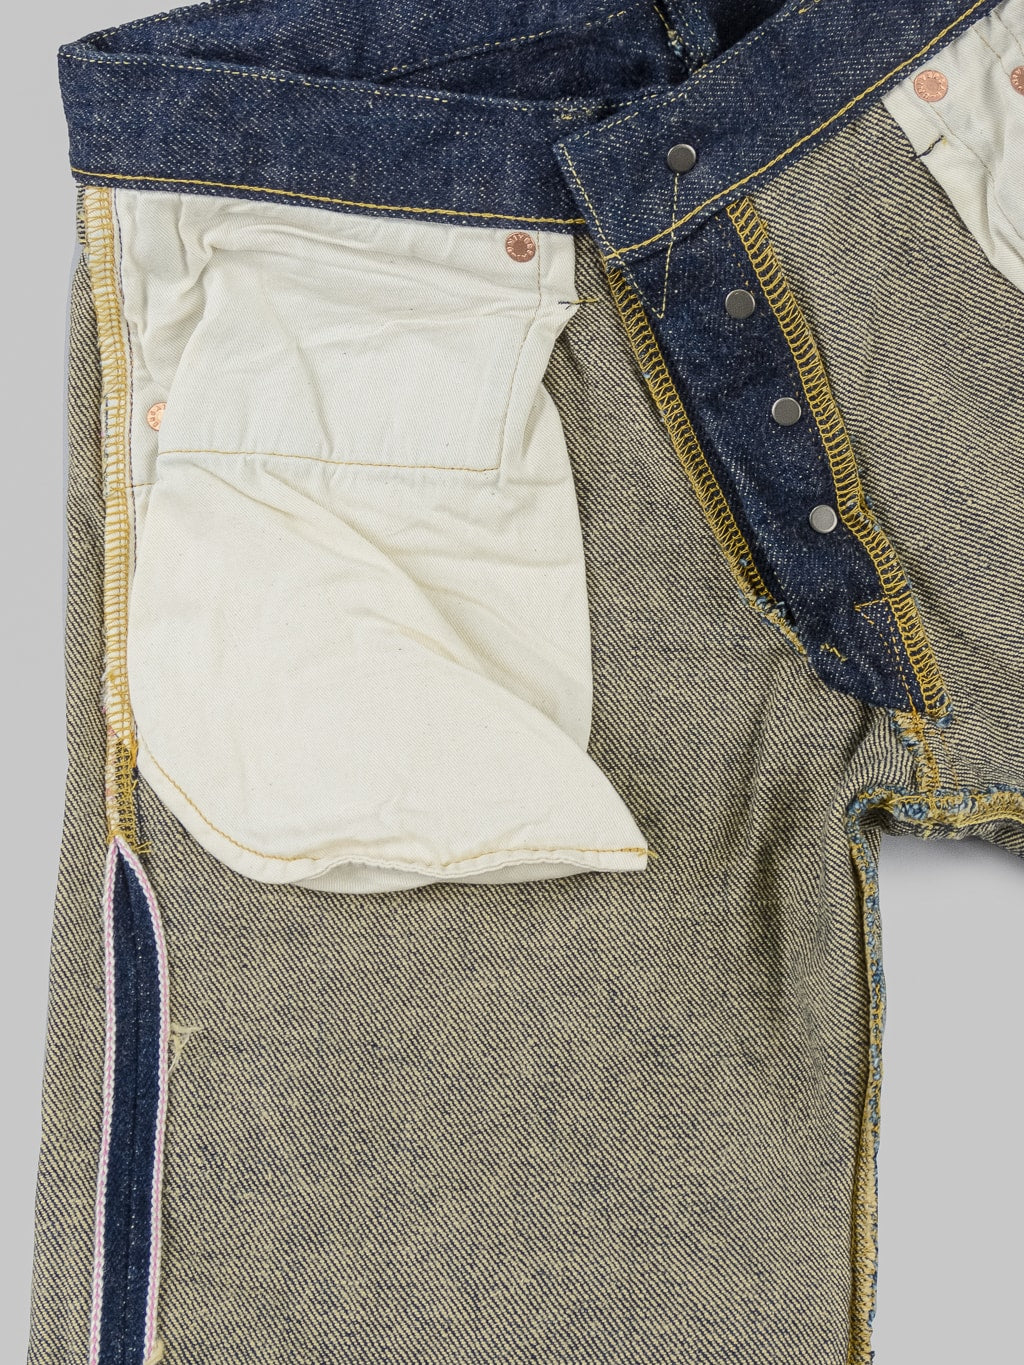 ONI Denim 544ZR Secret Denim Stylish Tapered Jeans weft bag pockets